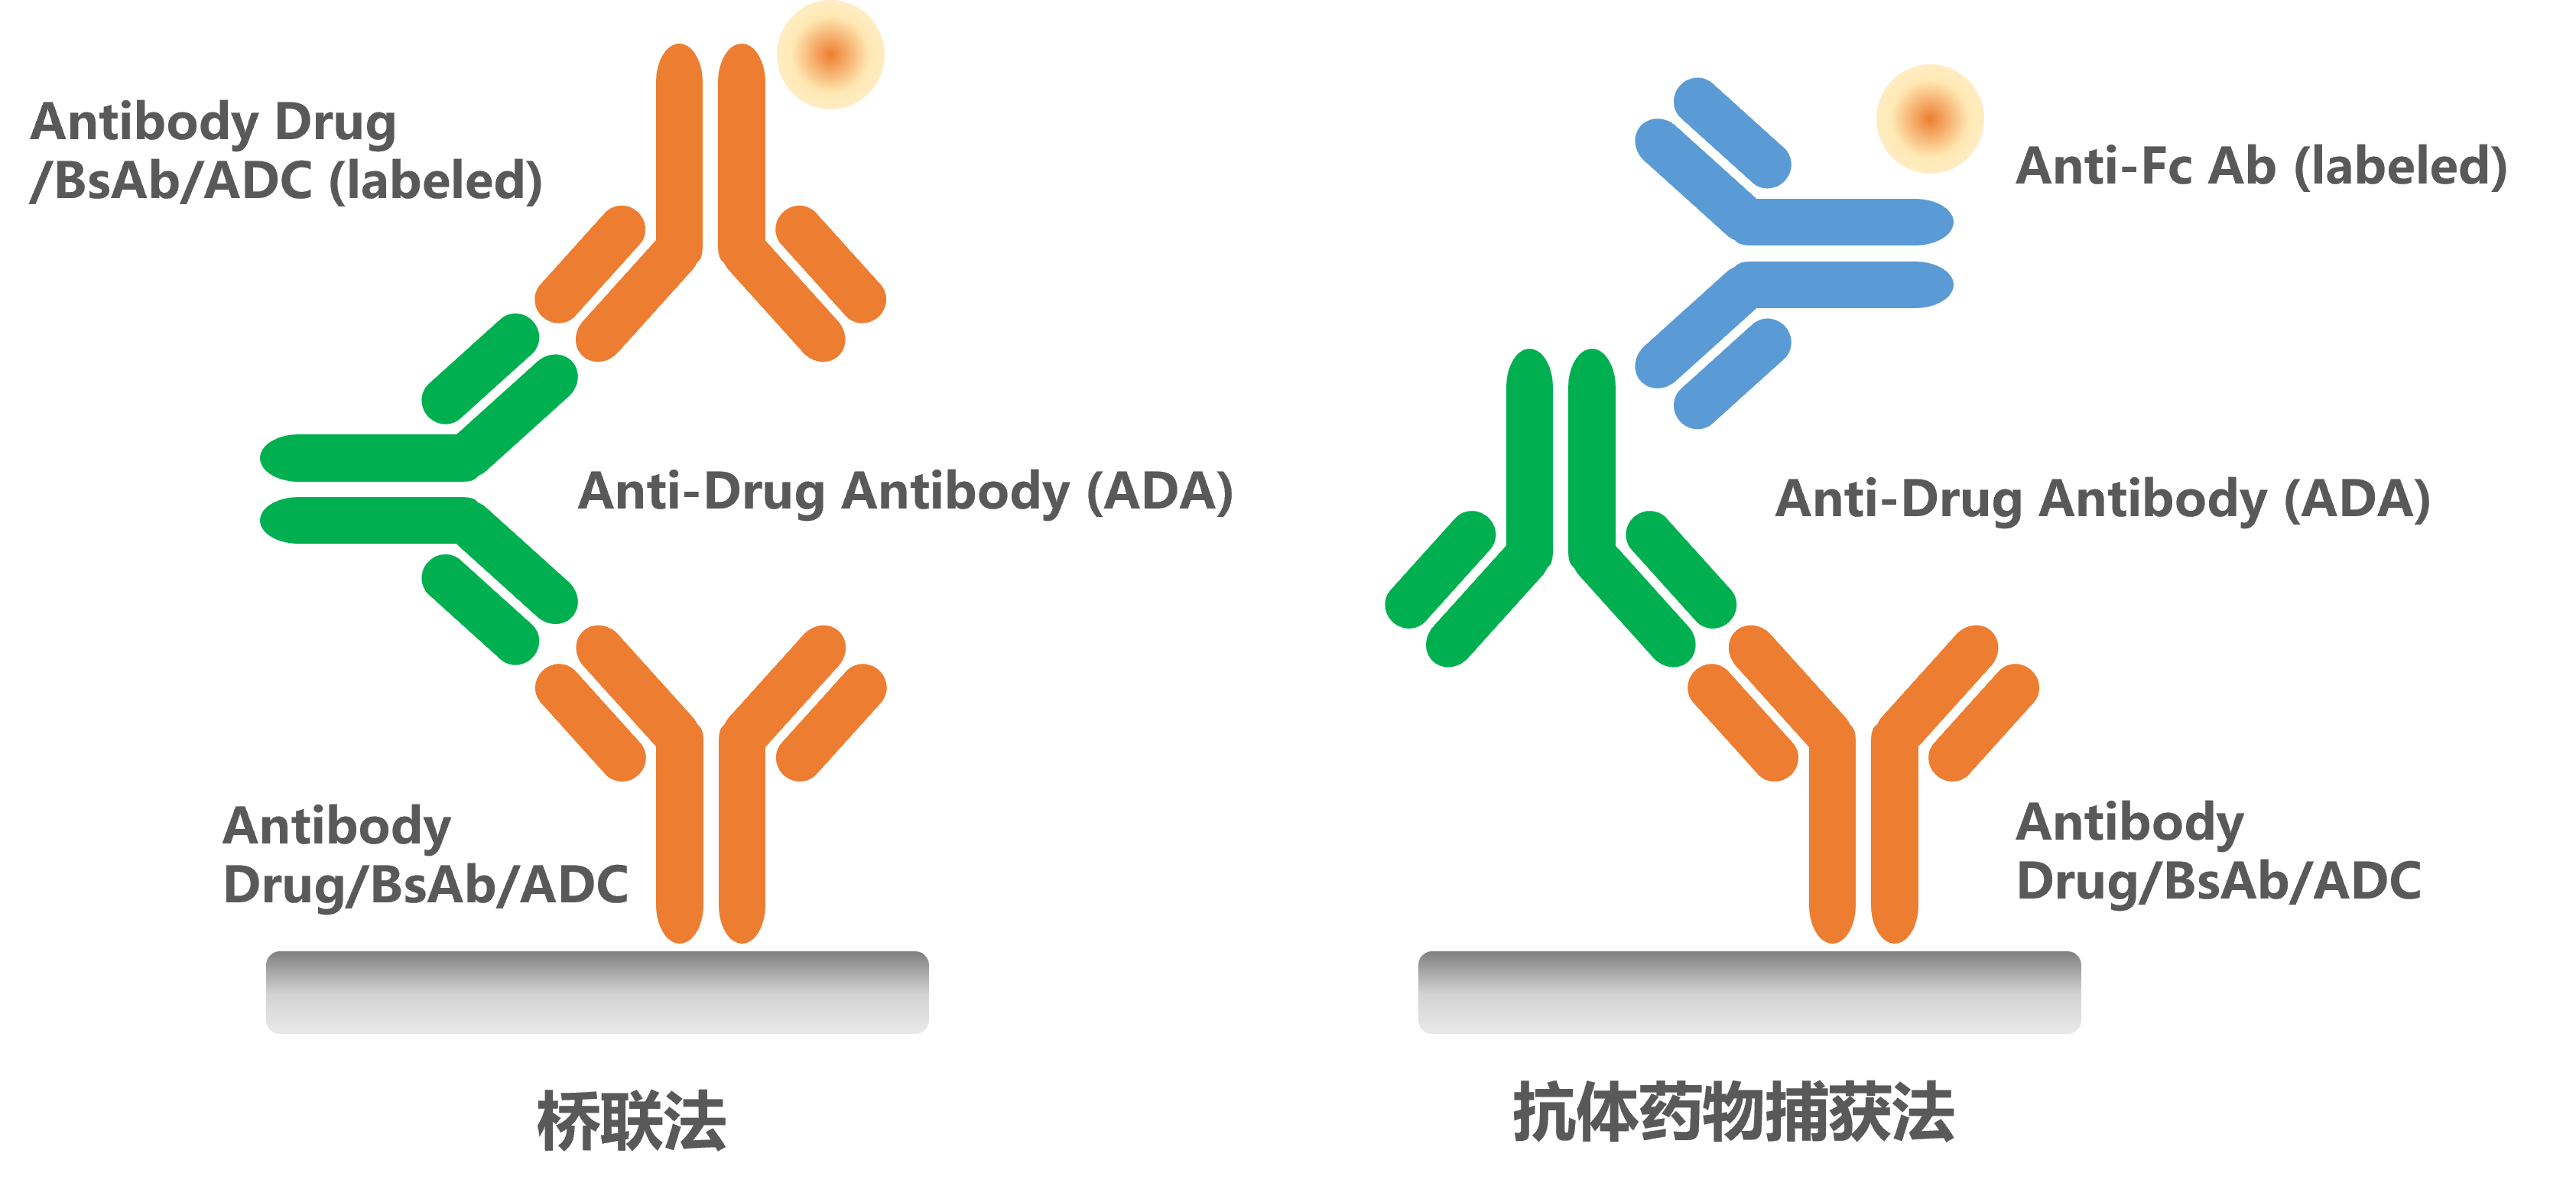 GenScript’s anti-idiotype antibodies